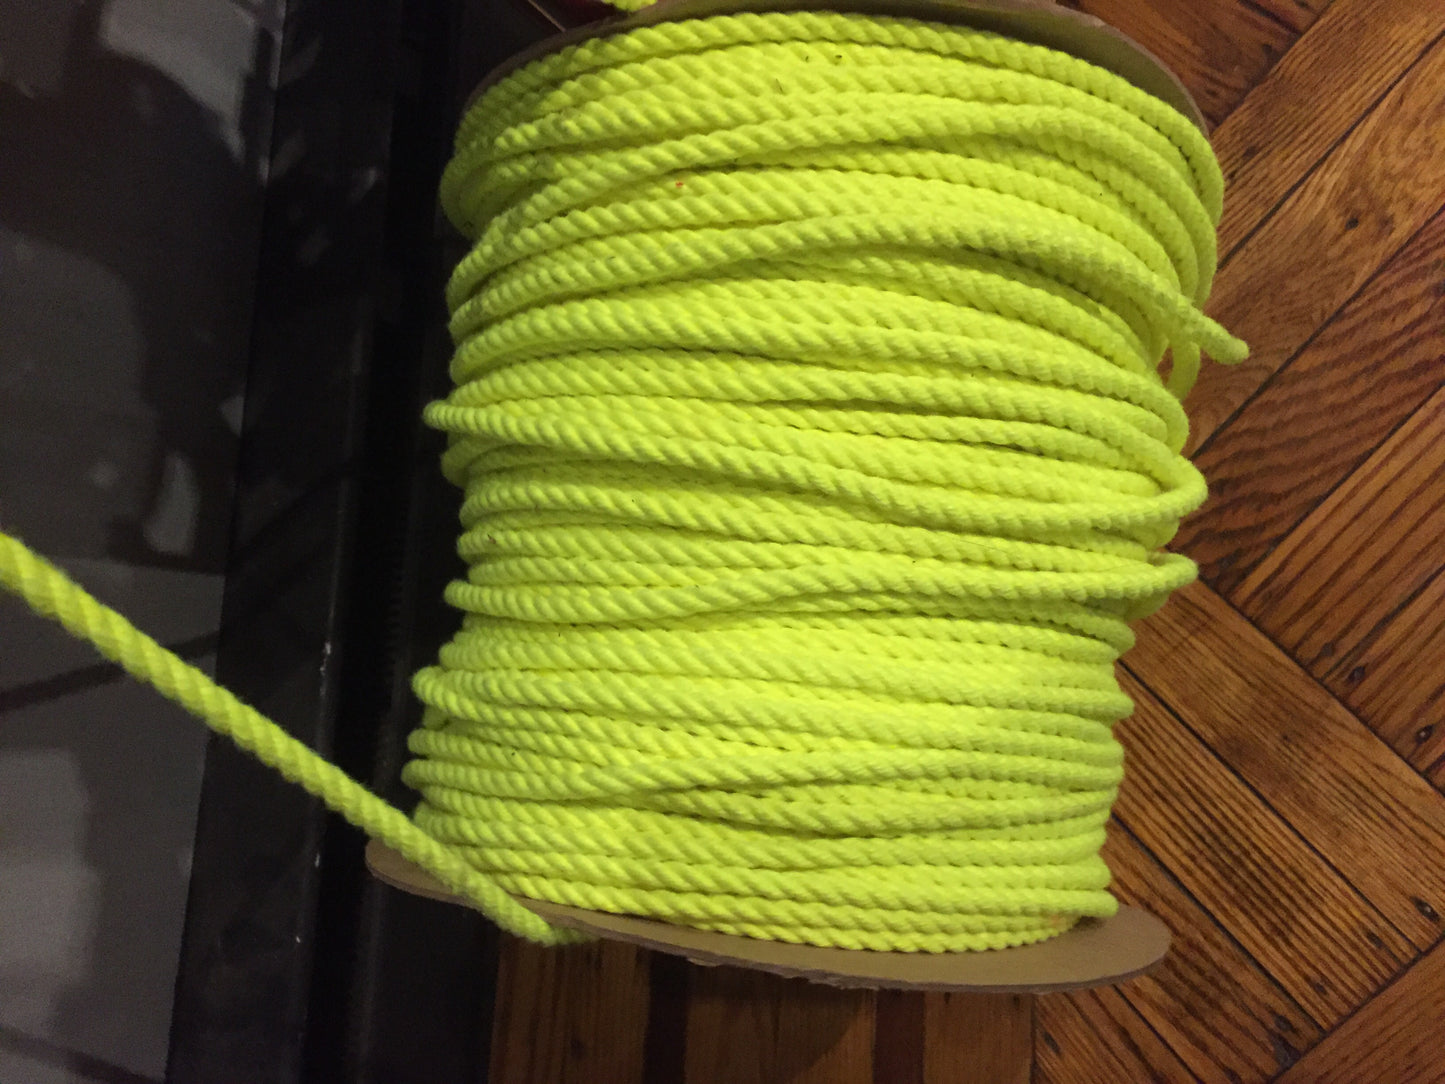 A spool of yello POSH Colorfast Synthetic Hemp Jute Rope.